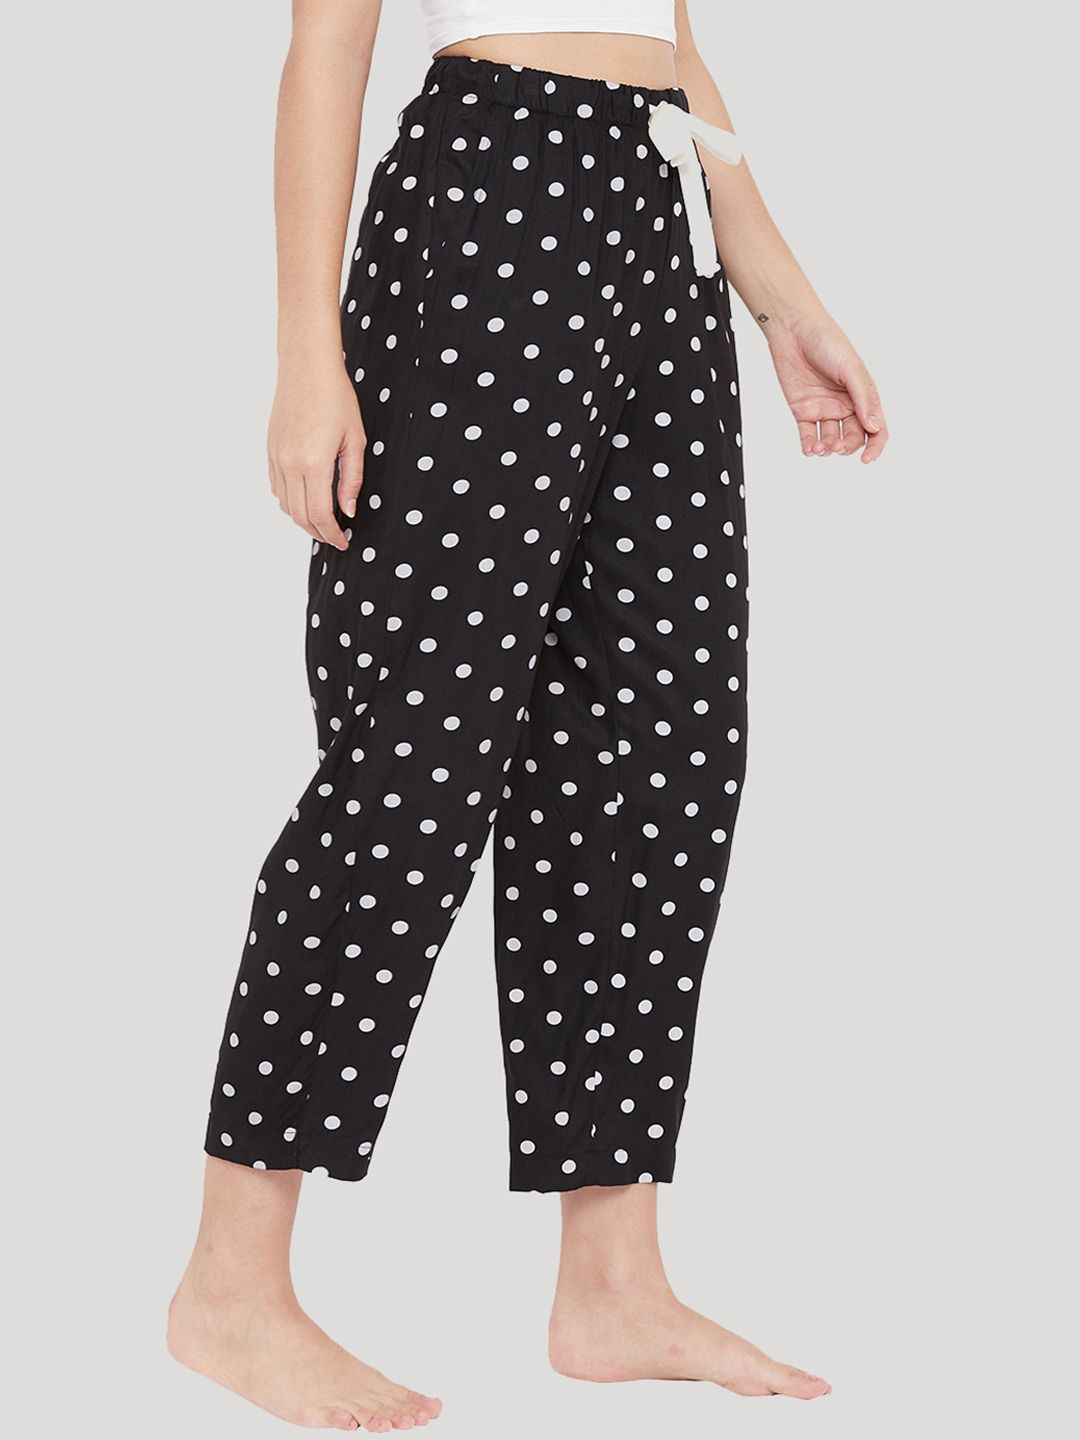 Style SHOES Women Black & White Polka Dot Print Cotton Lounge Pant Price in India